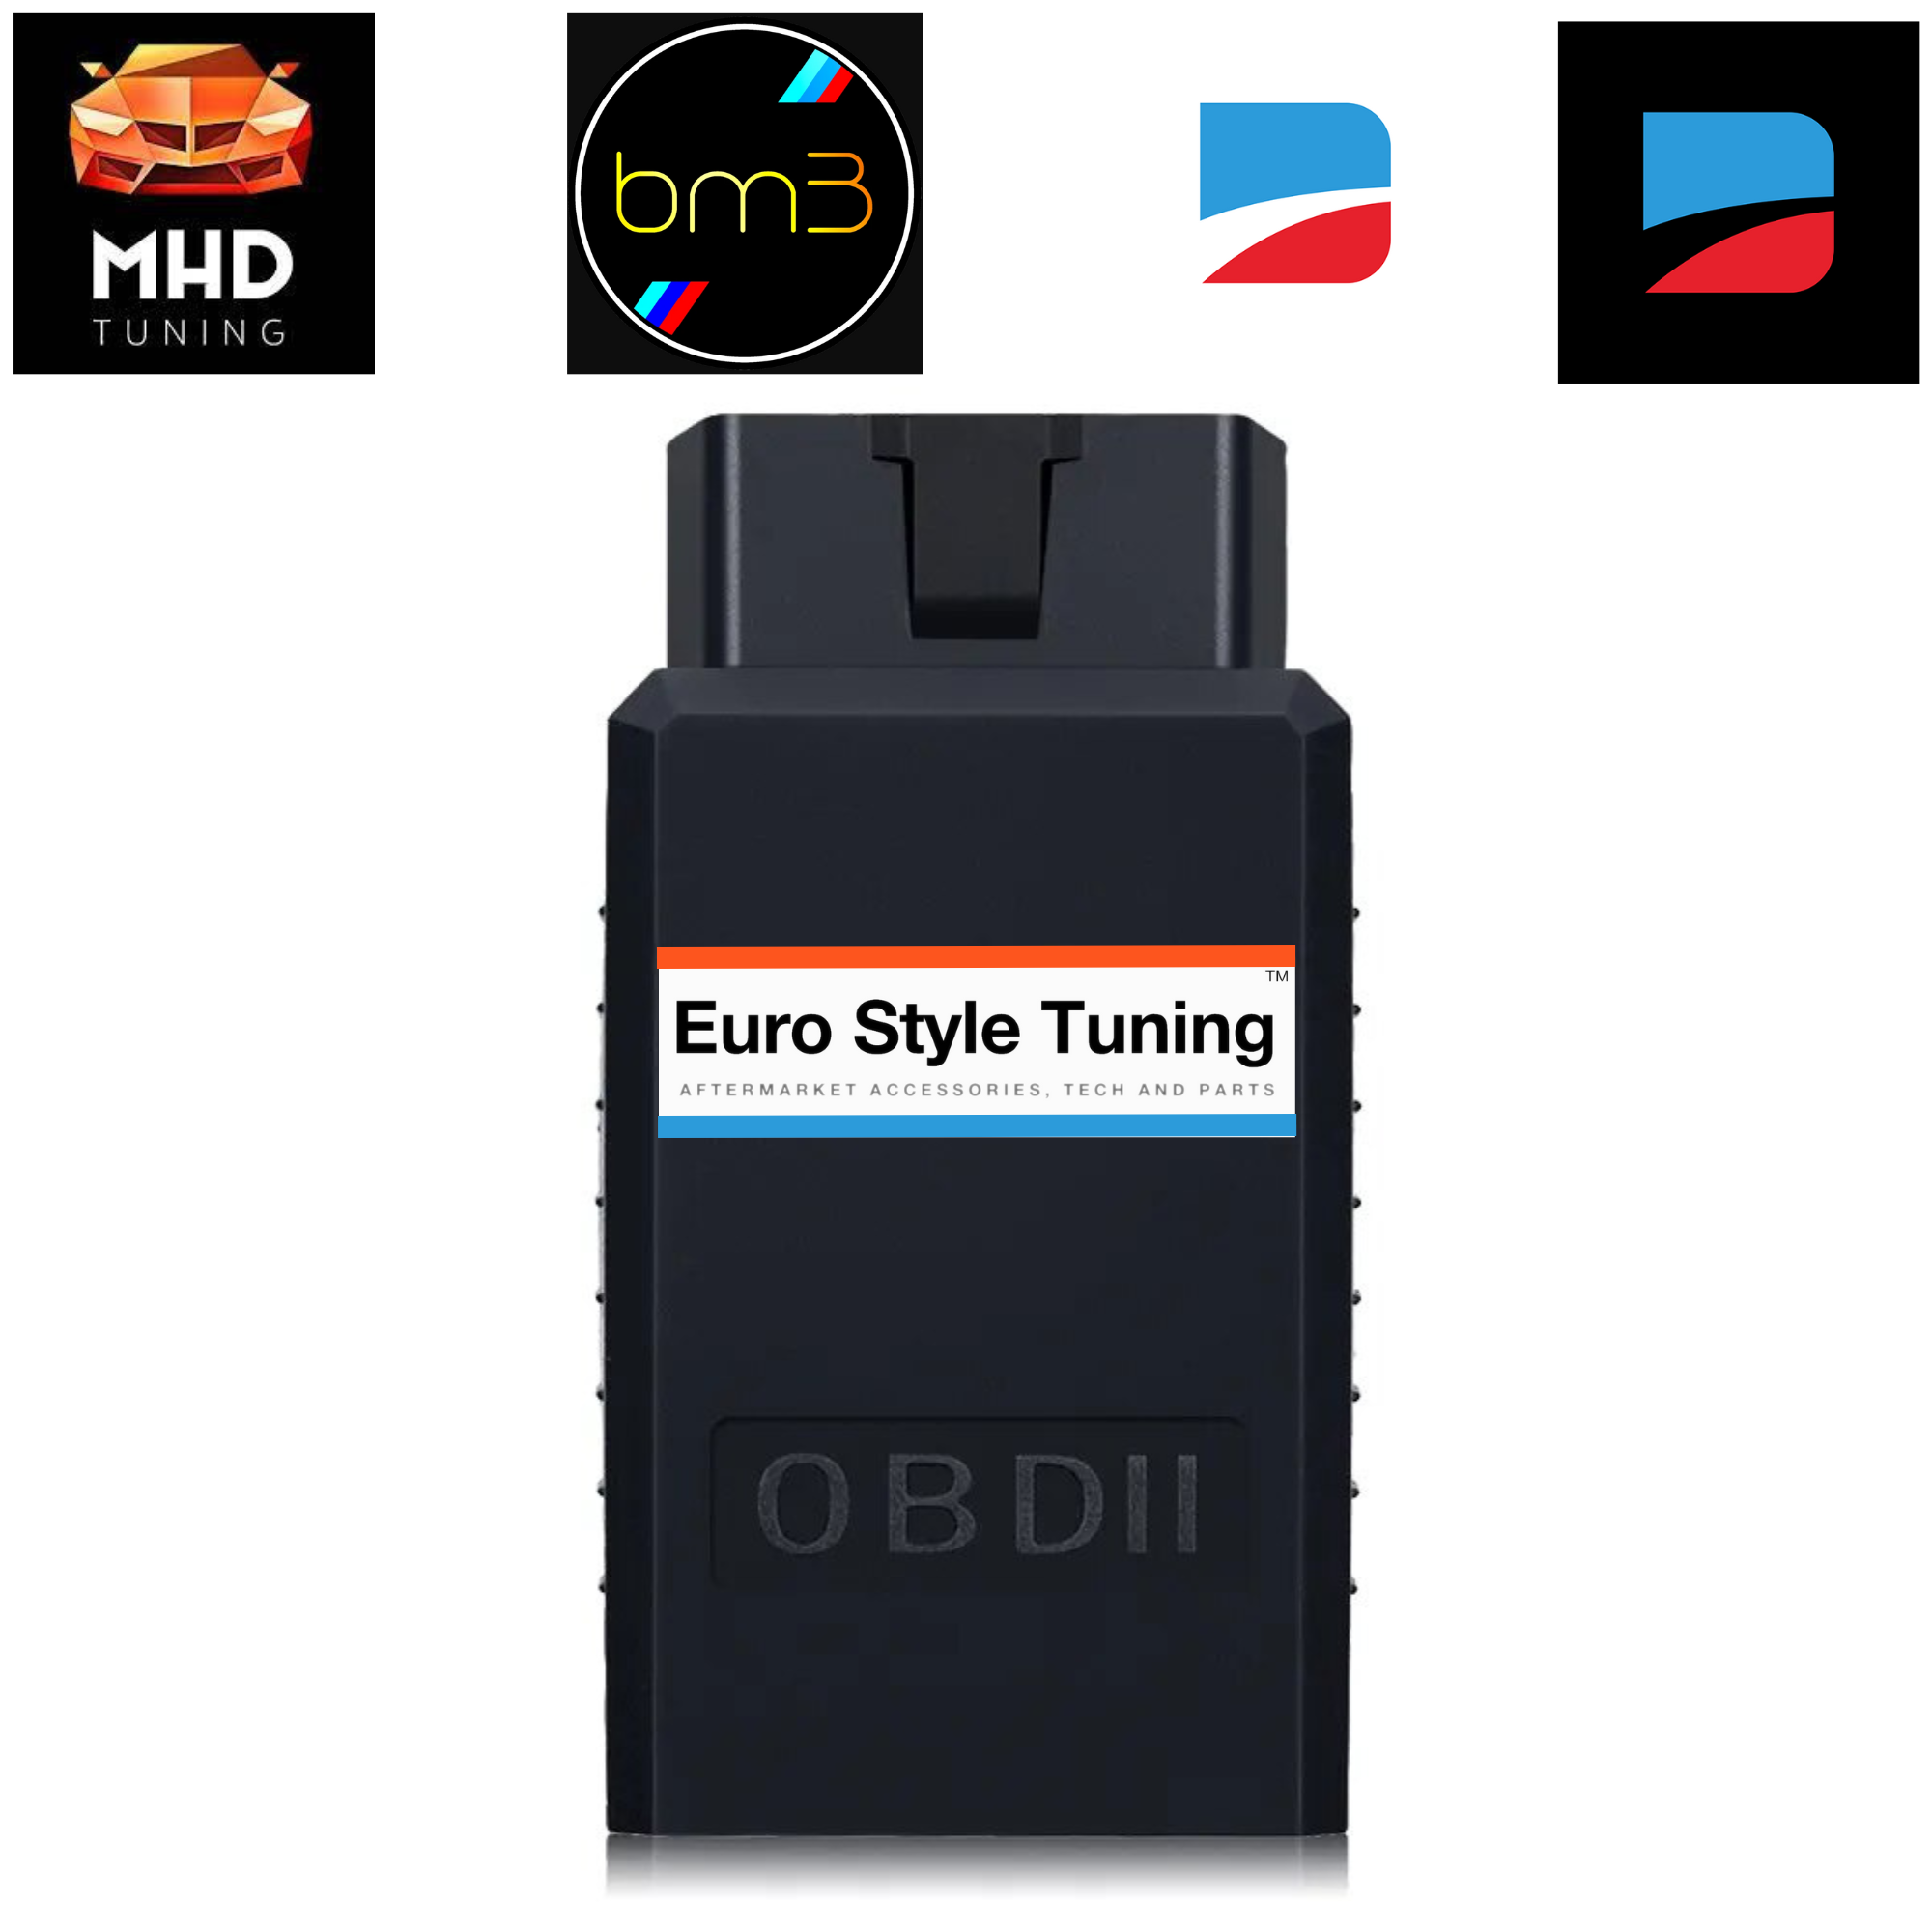 Euro ConnectB - MHD, BM3, Esys, ISTA Wifi Enet Adapter